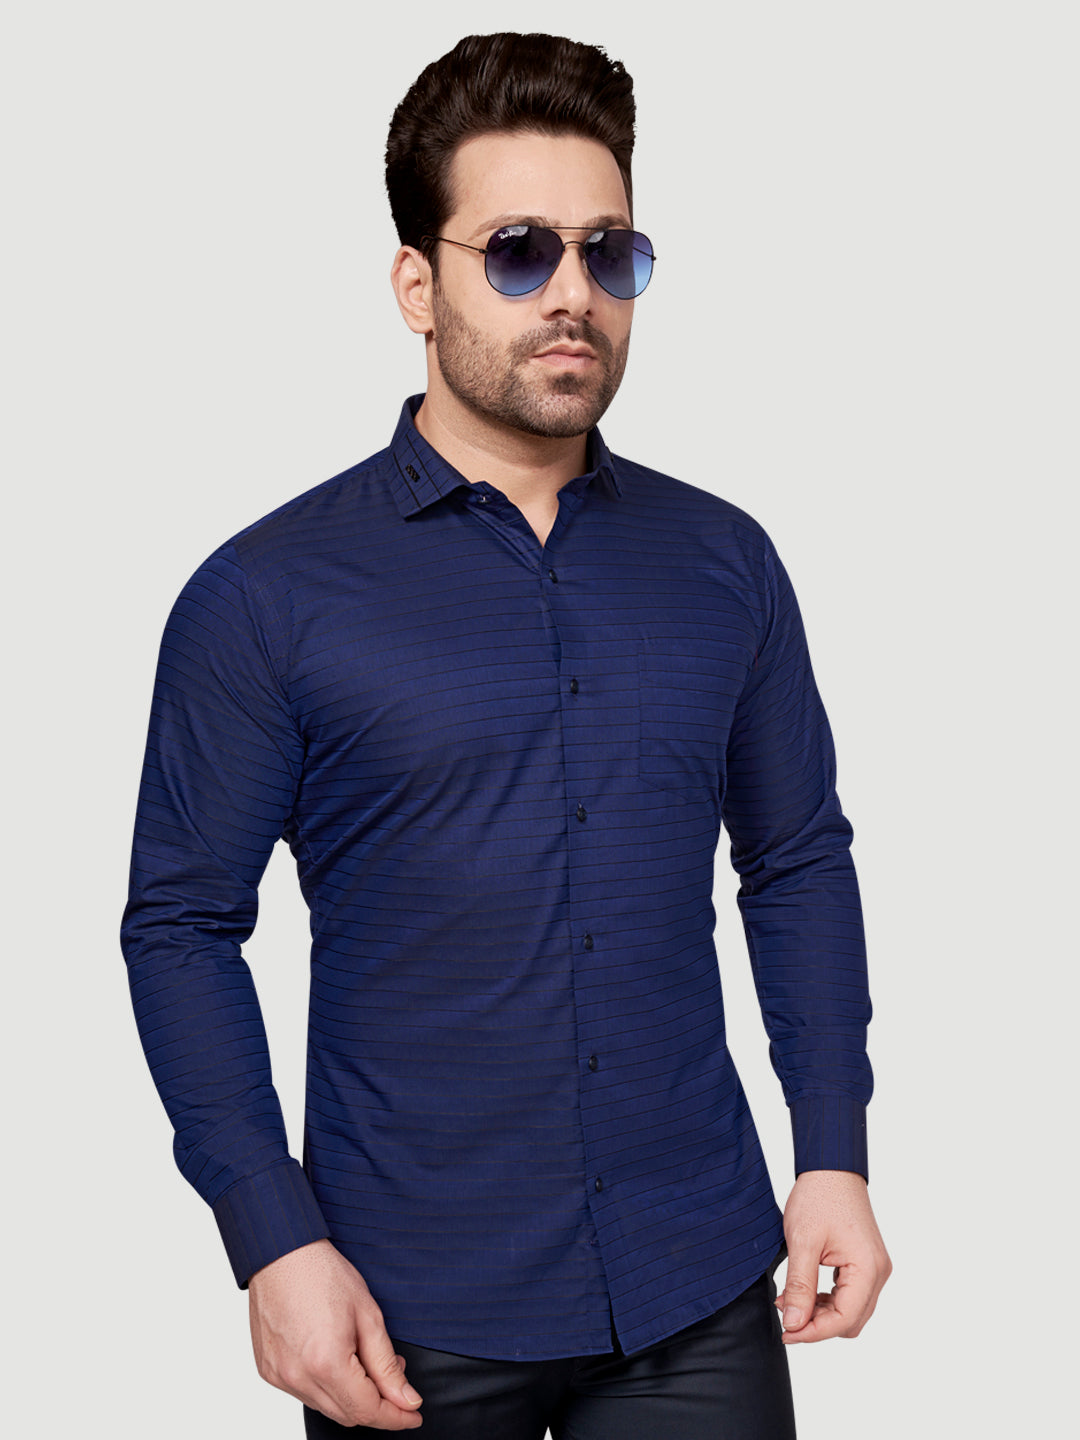 Black & White Men's Designer Weft Shirt with Collar Accessory Royal Blue